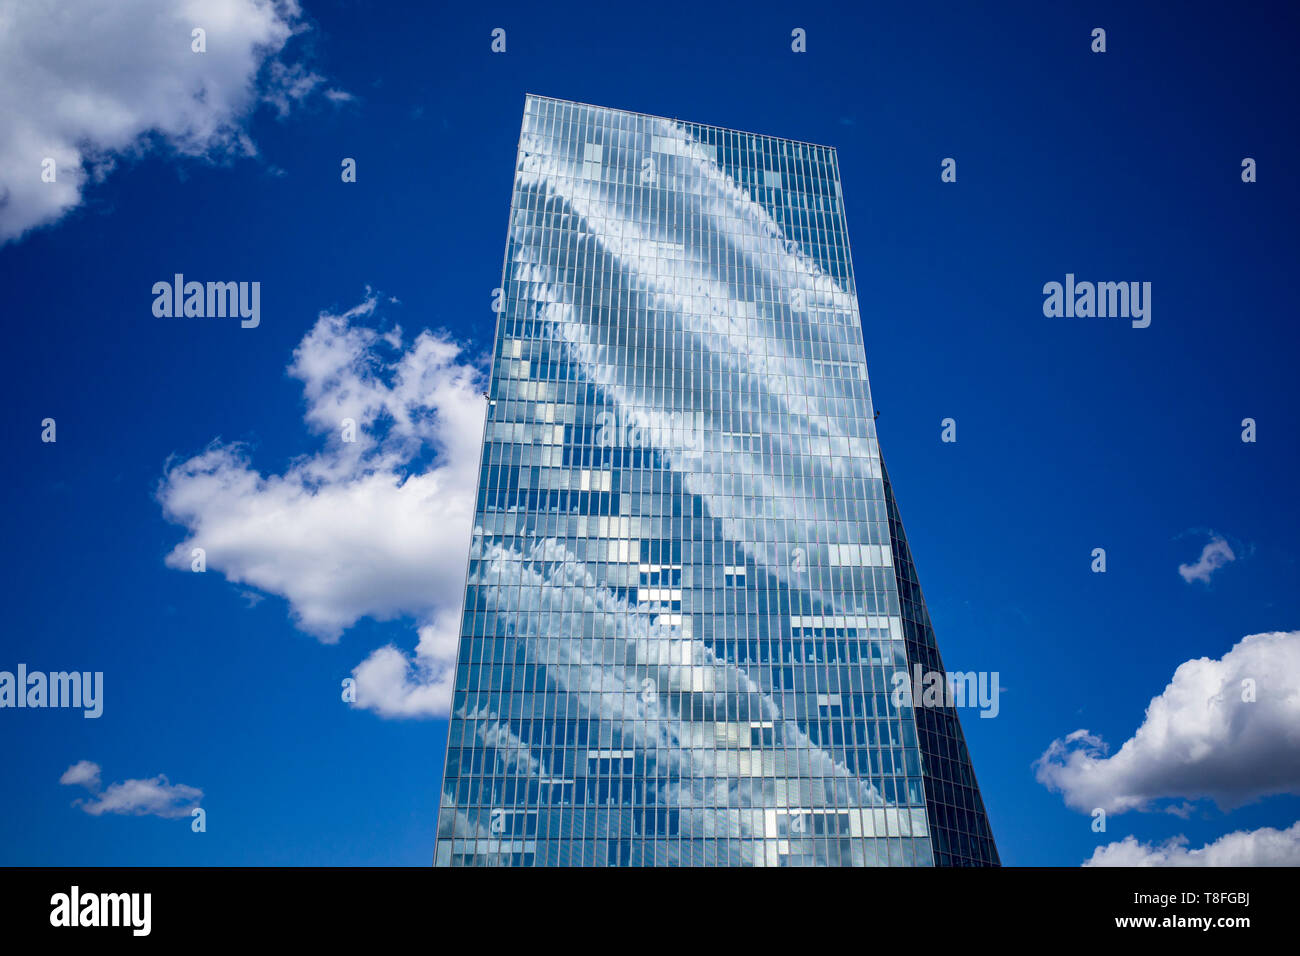 L'architecture moderne, Banque centrale européenne Francfort Allemagne Banque D'Images